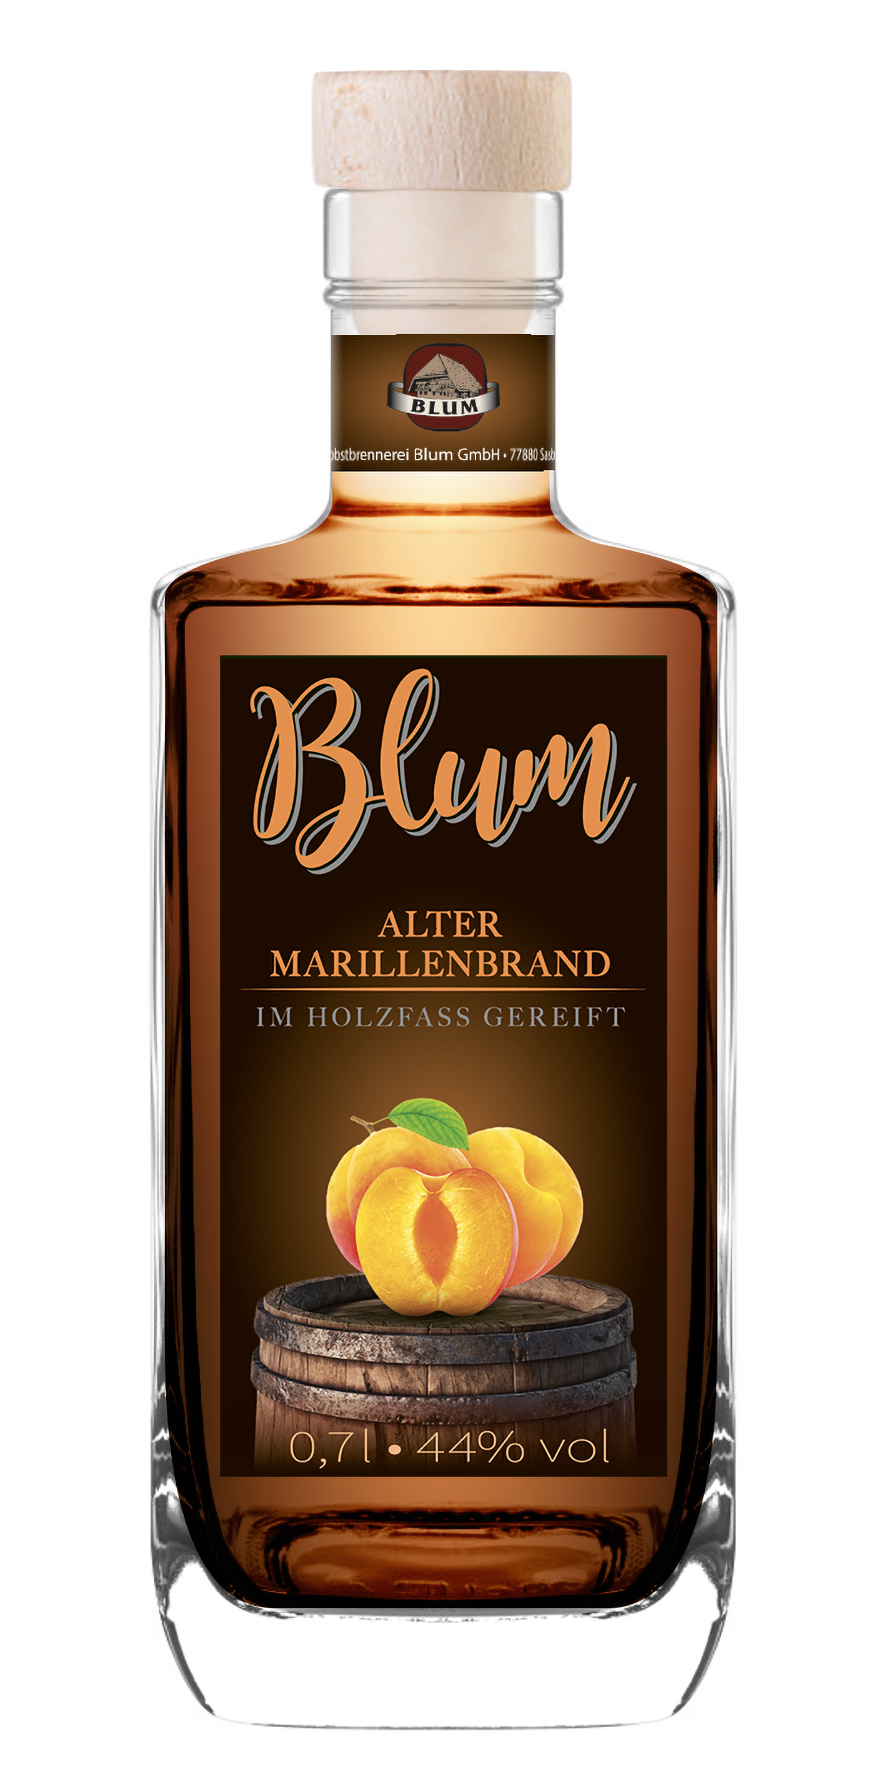 Alter Marillenbrand im Holzfass Edelobstbrennerei Blum GmbH